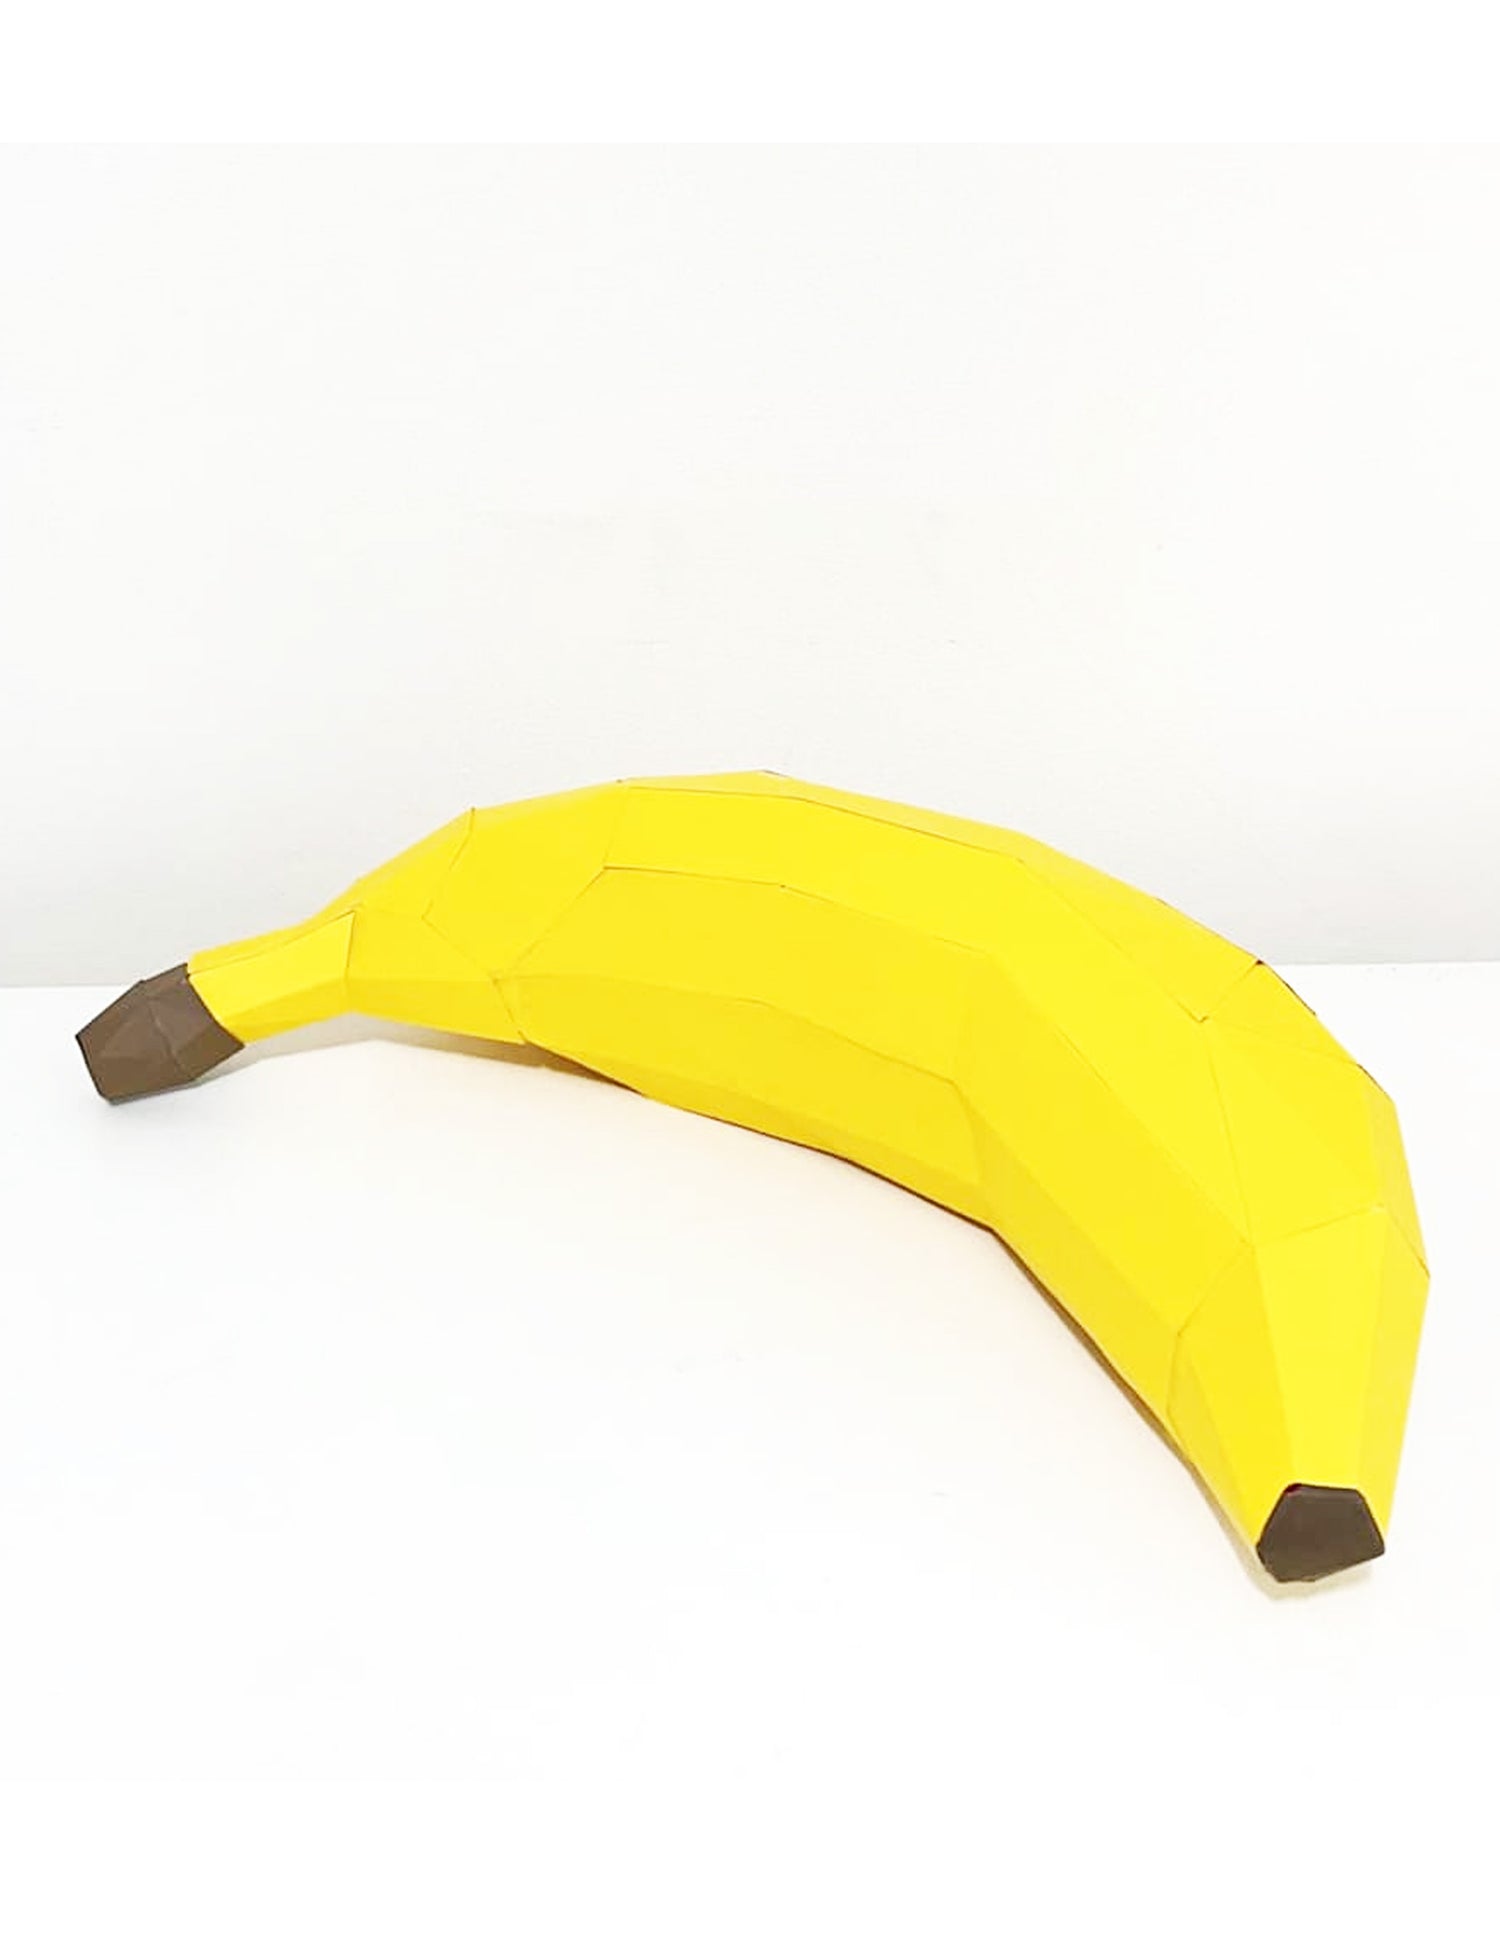 Casse-tête 3D banane. Vendu chez Tah-dah ! 